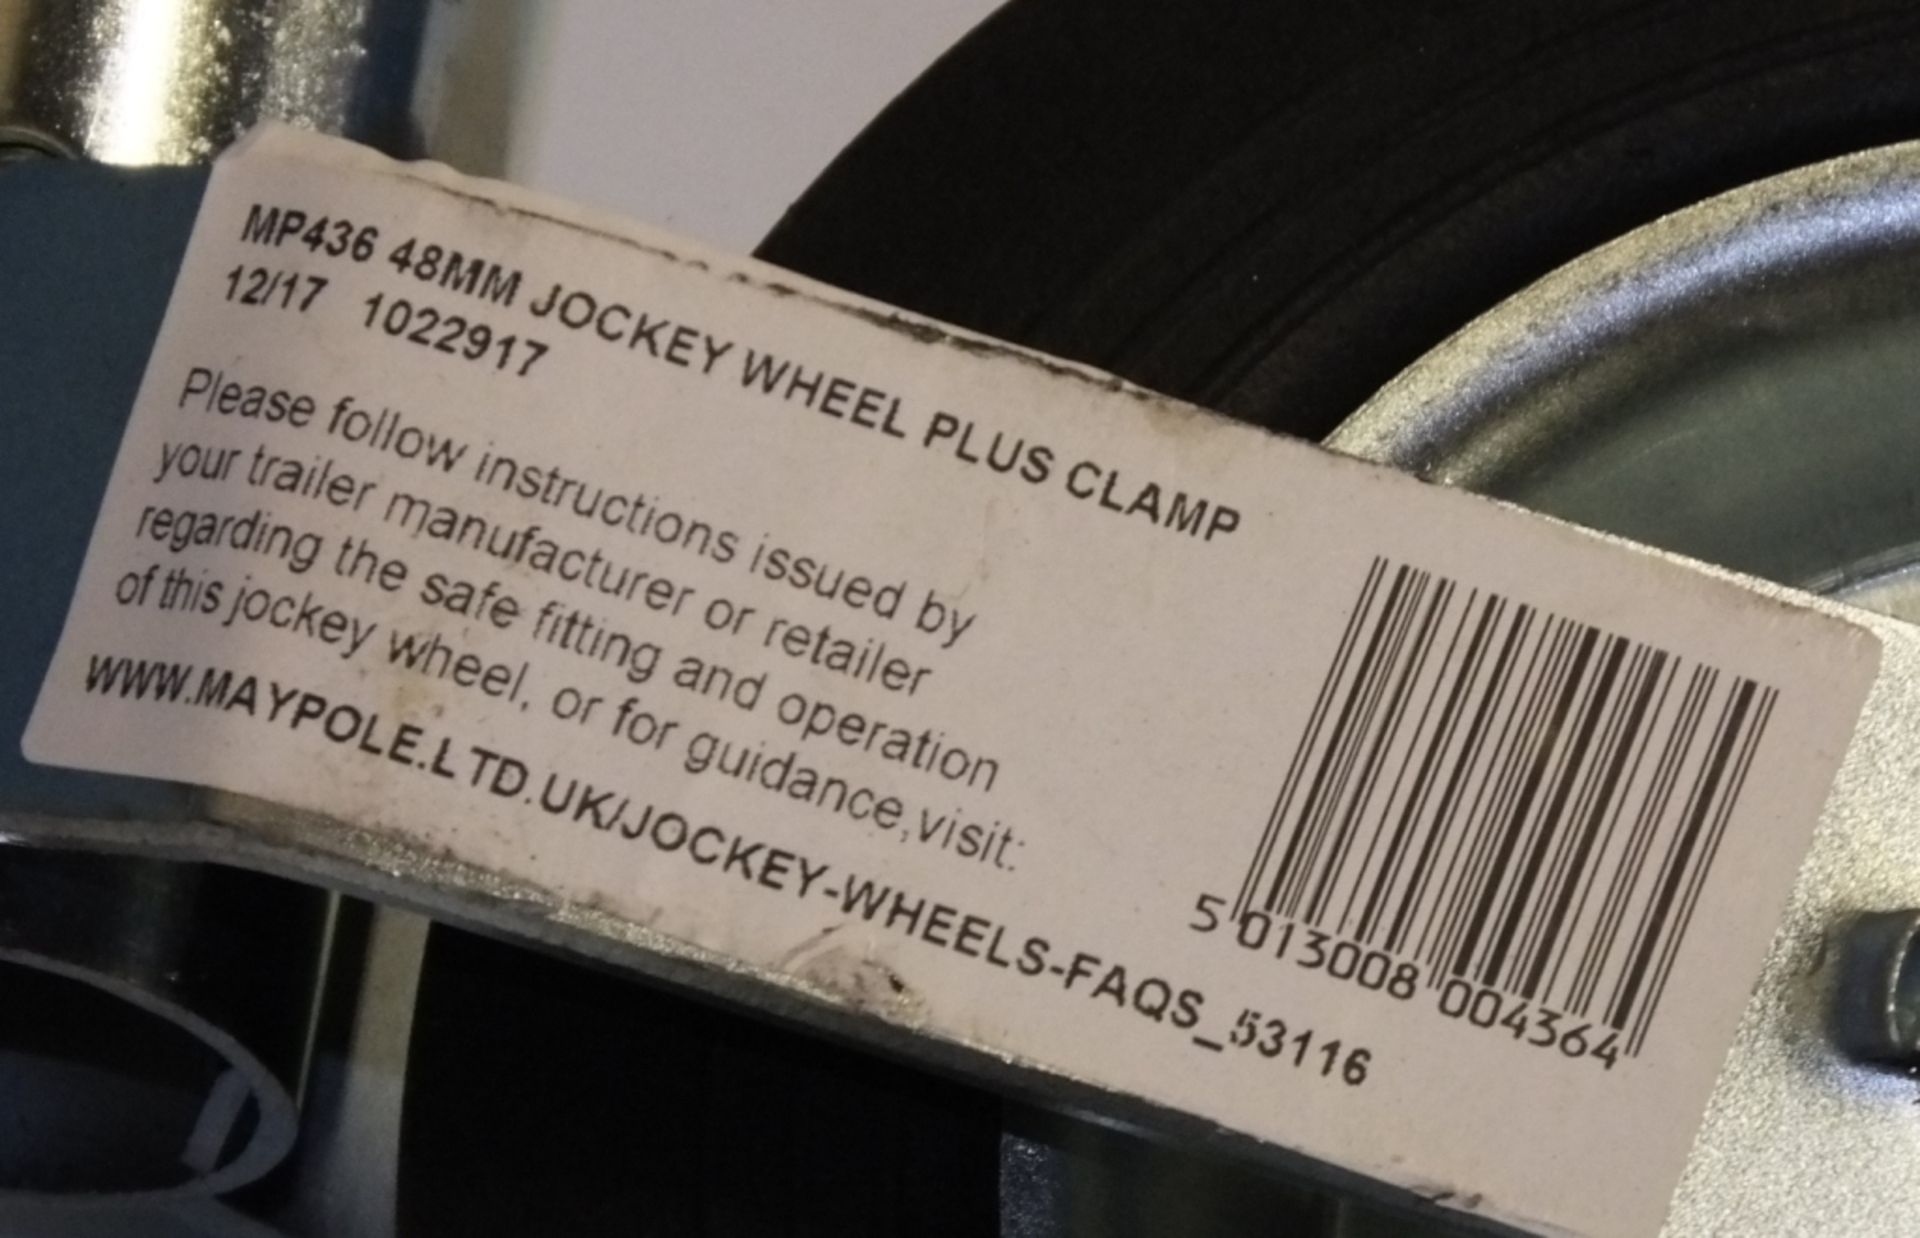 Jockey wheel plus clamp - MP436 - 48mm - Bild 3 aus 3